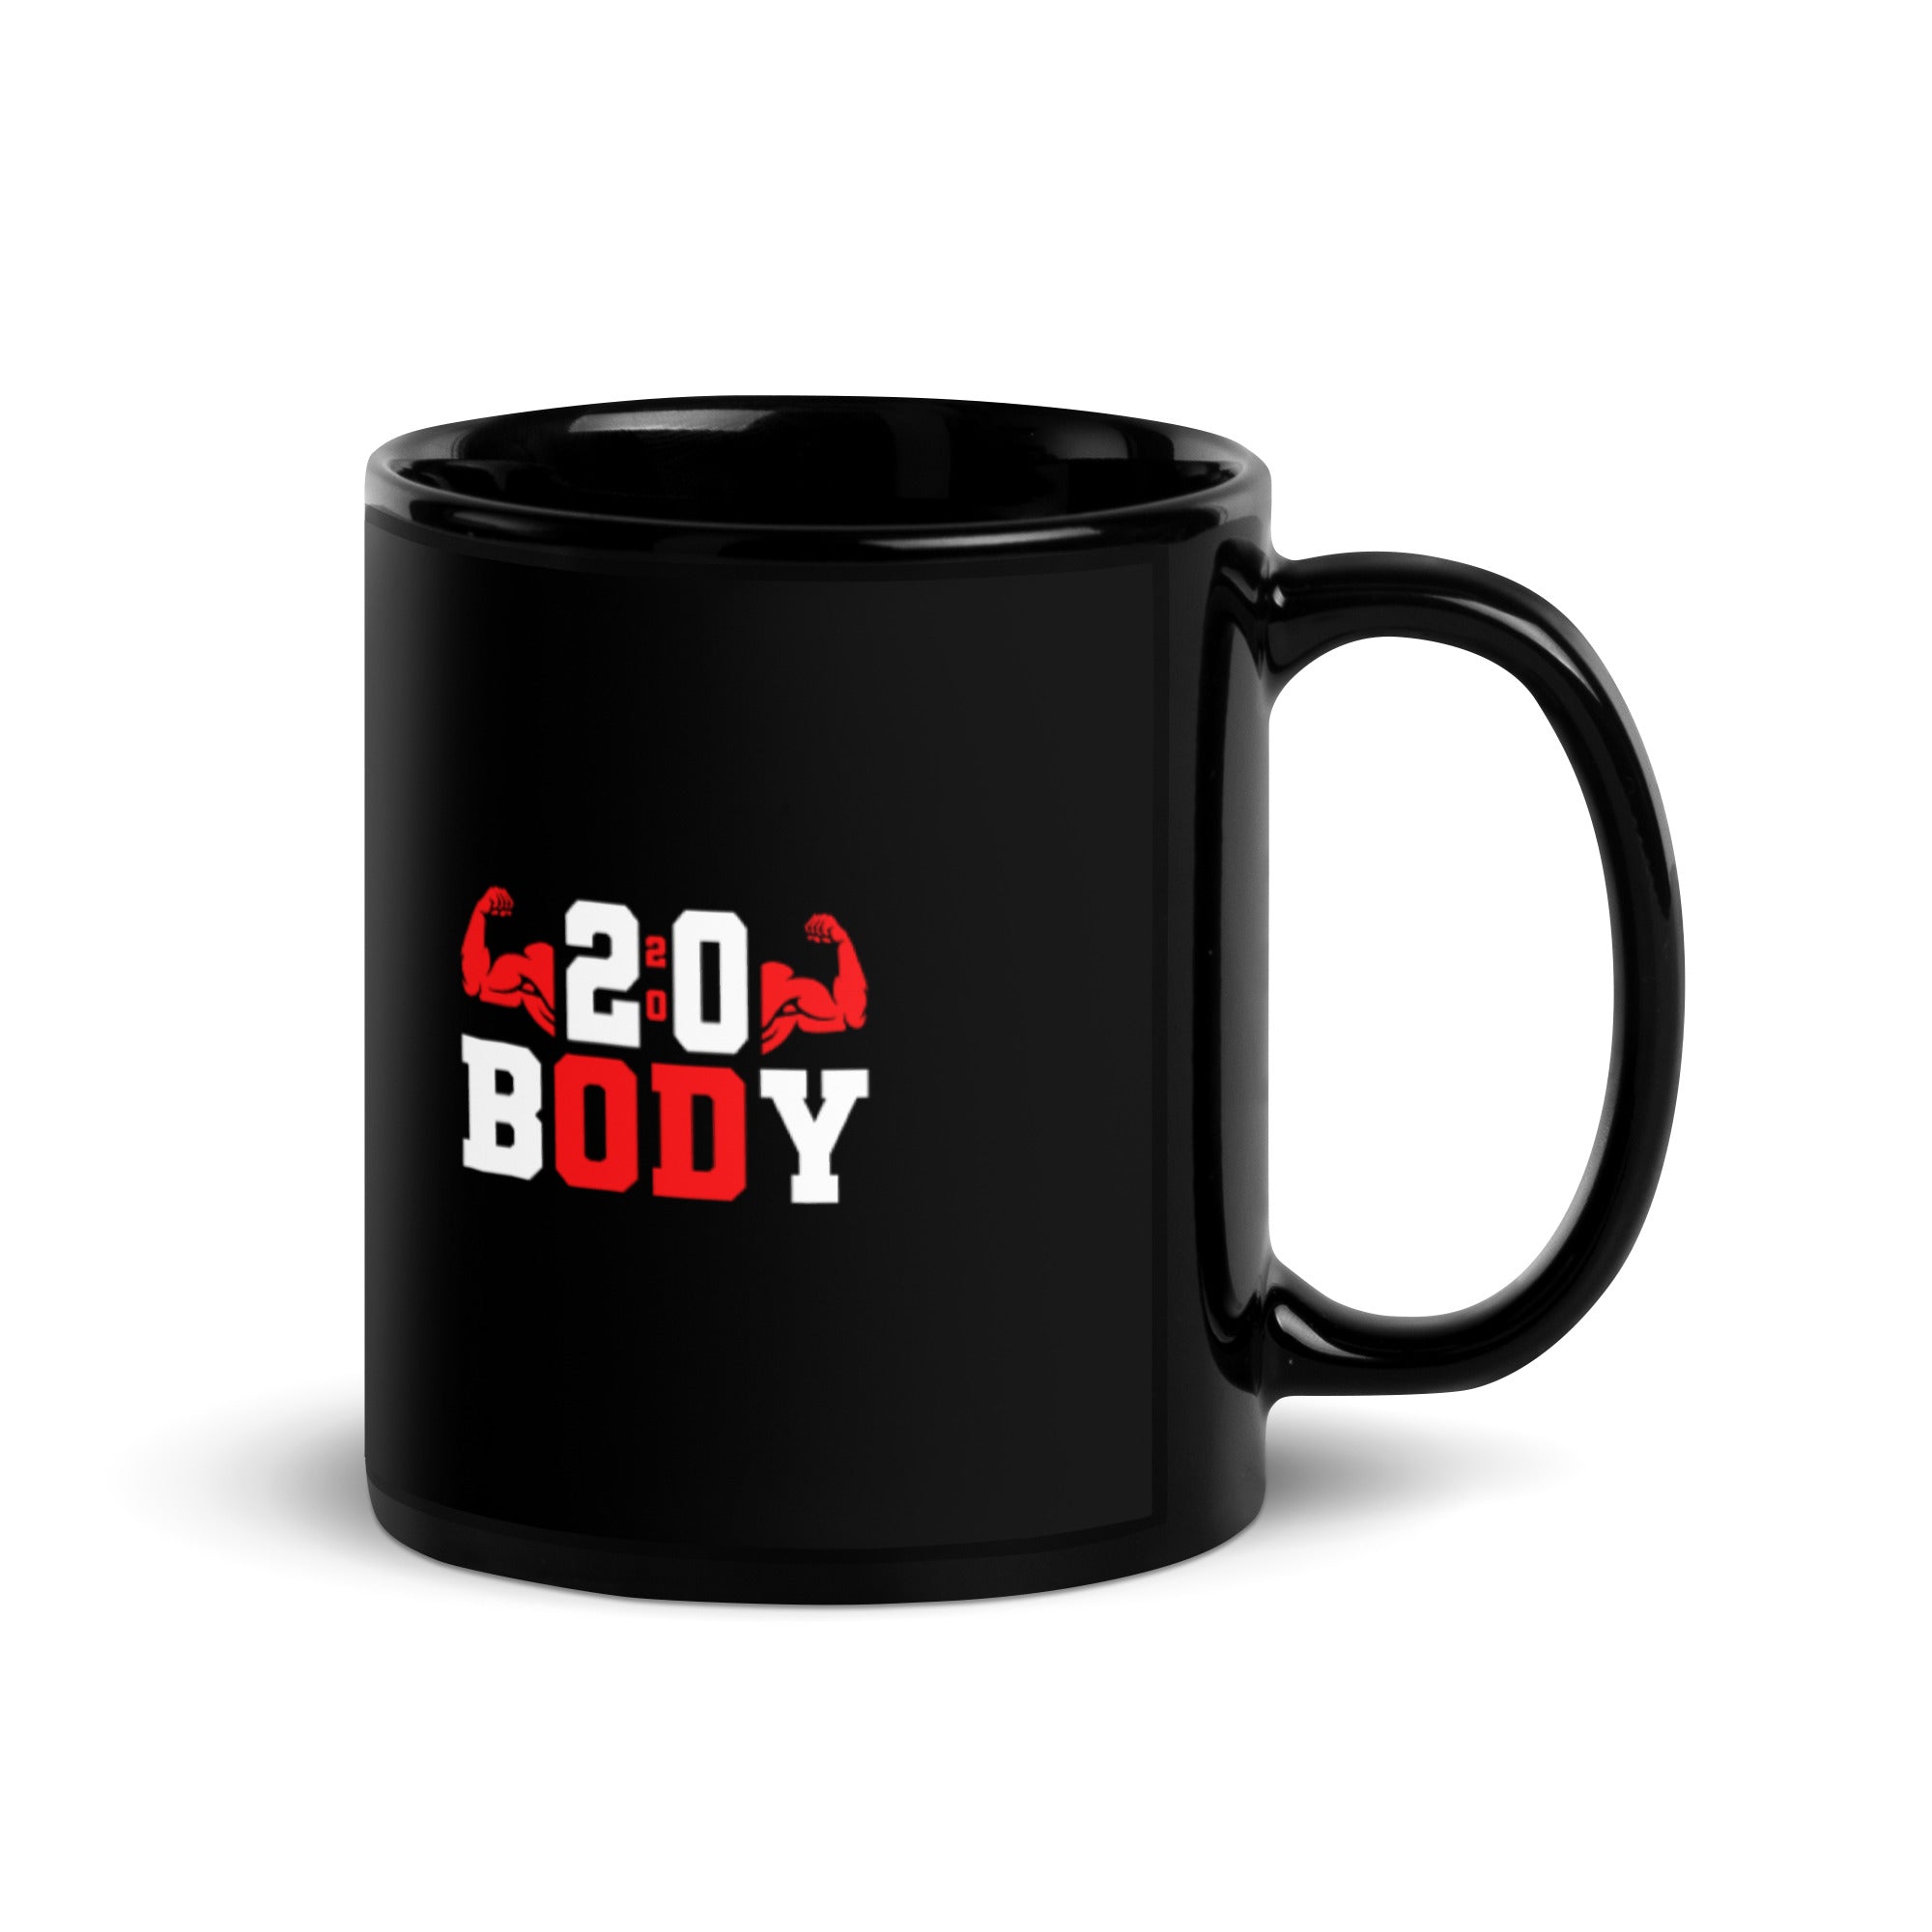 2:0 Body - Black Glossy Mug